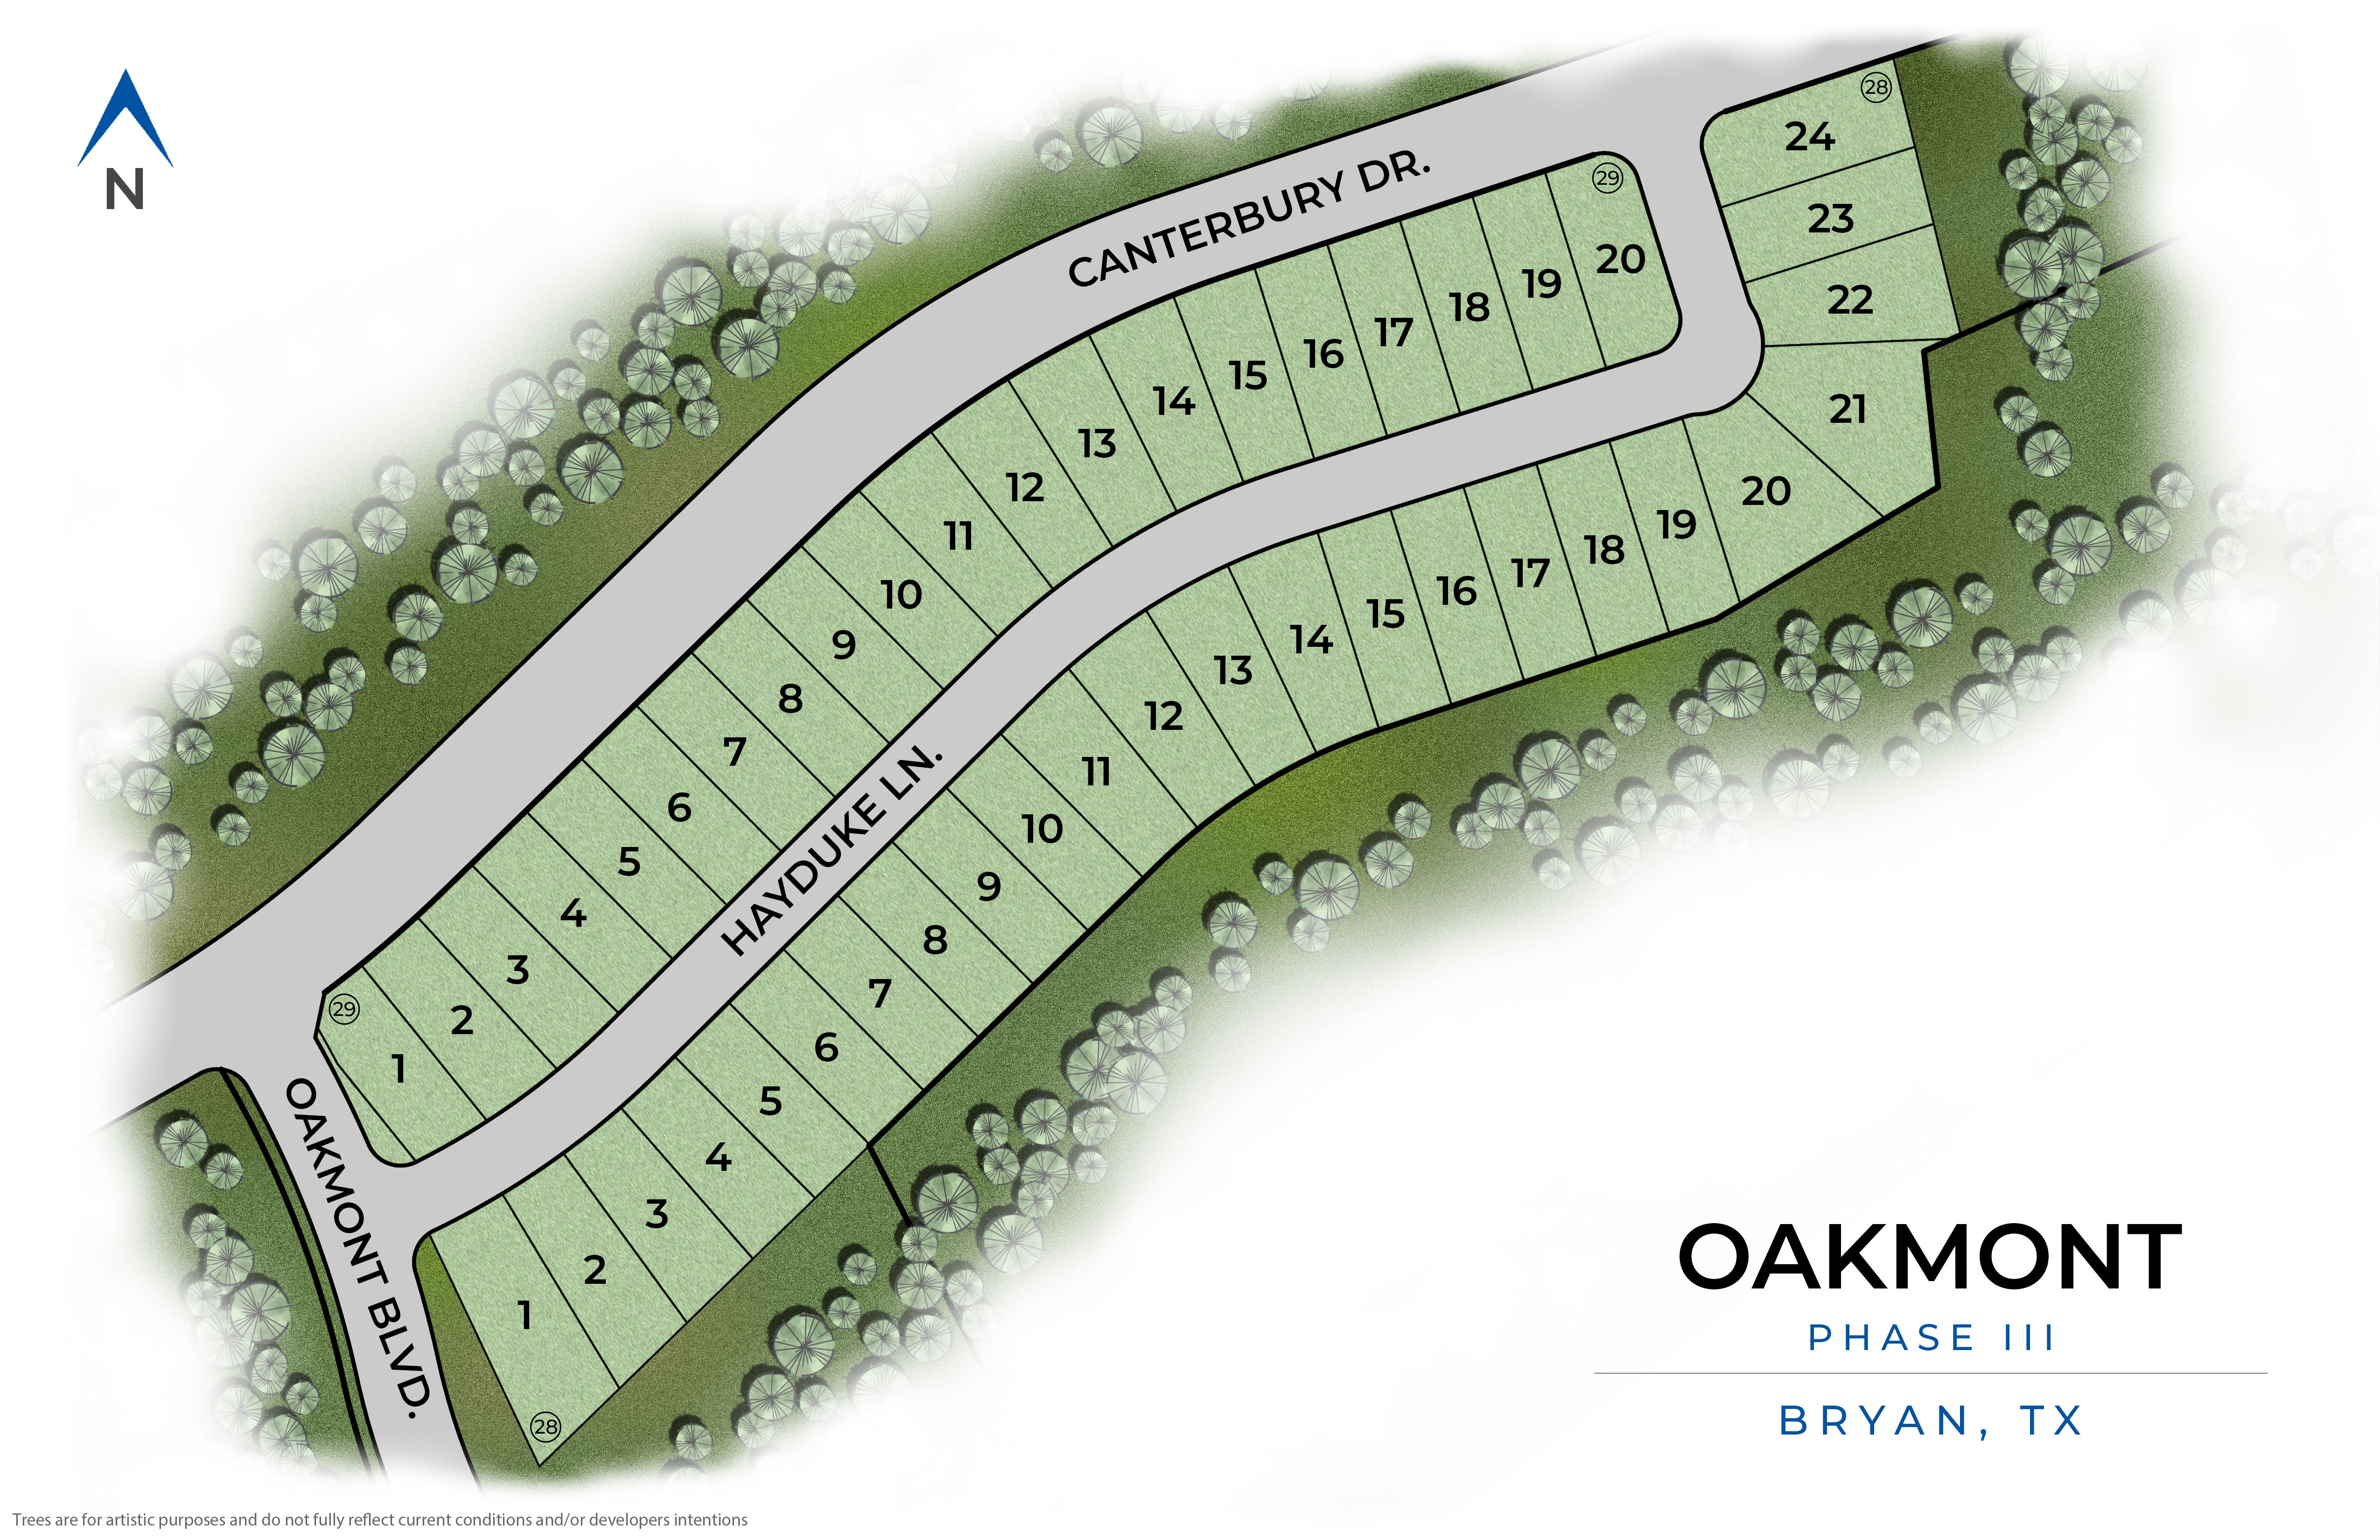 Bryan, TX Oakmont New Homes from Stylecraft Builders